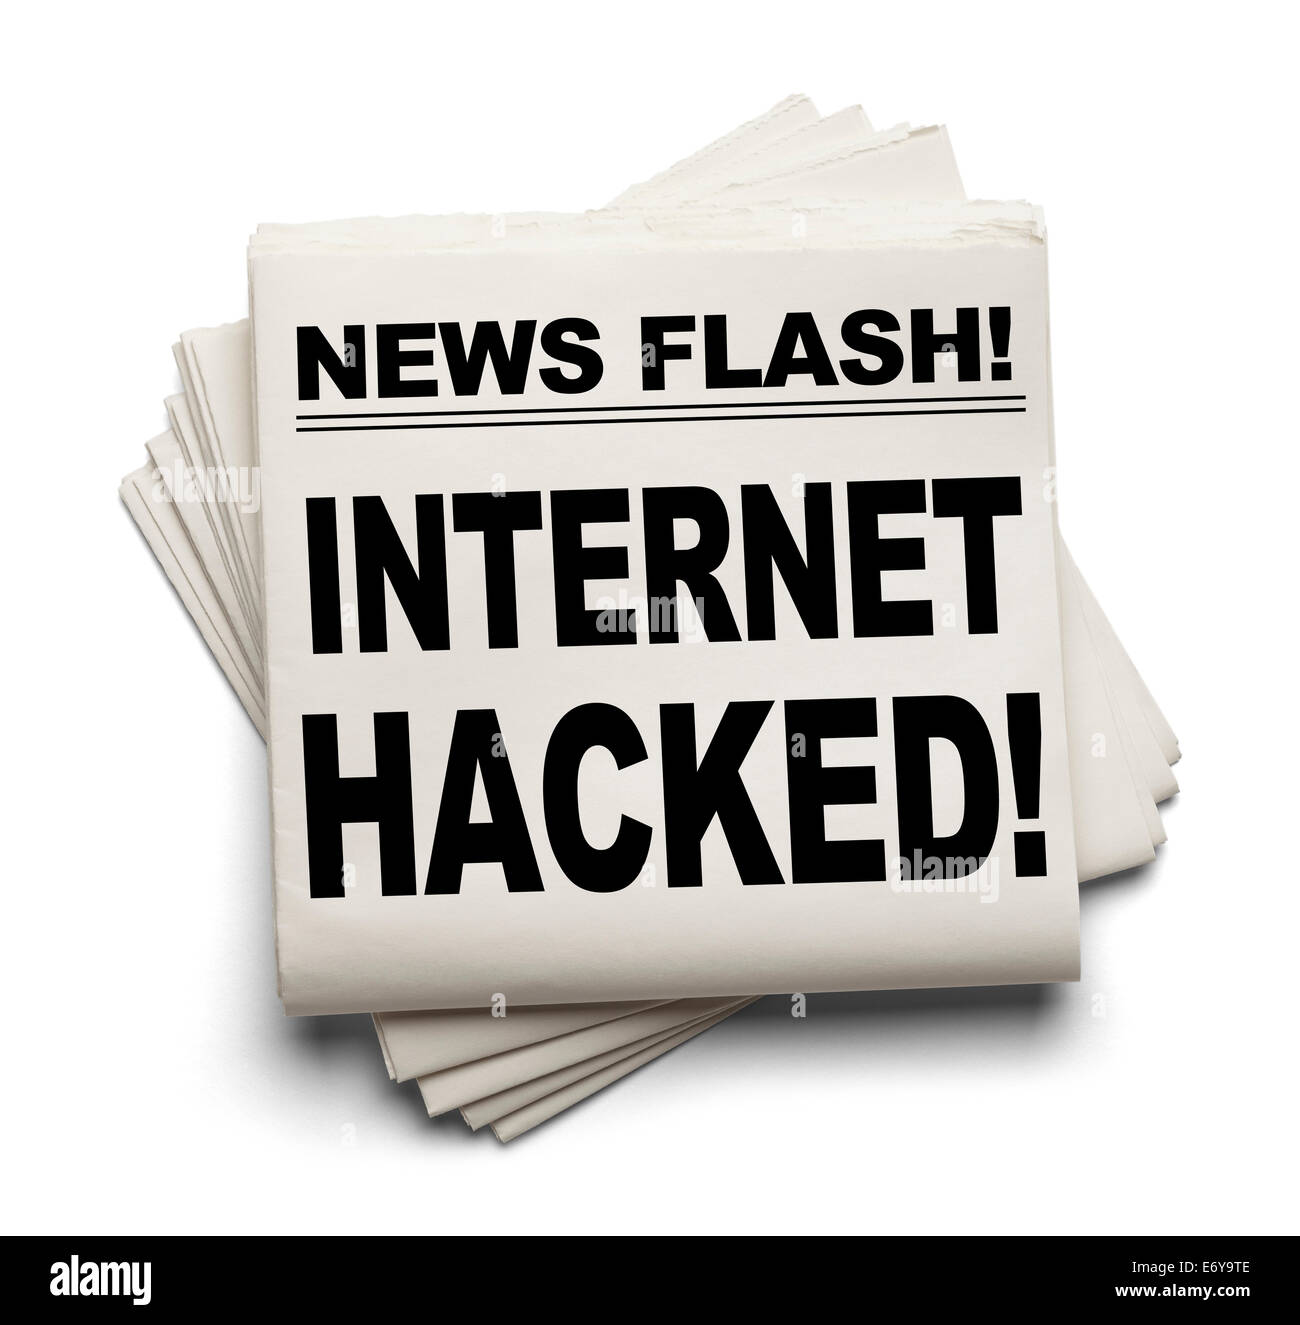 Notizie Flash Internet Hacked notizia carta isolato su sfondo bianco. Foto Stock